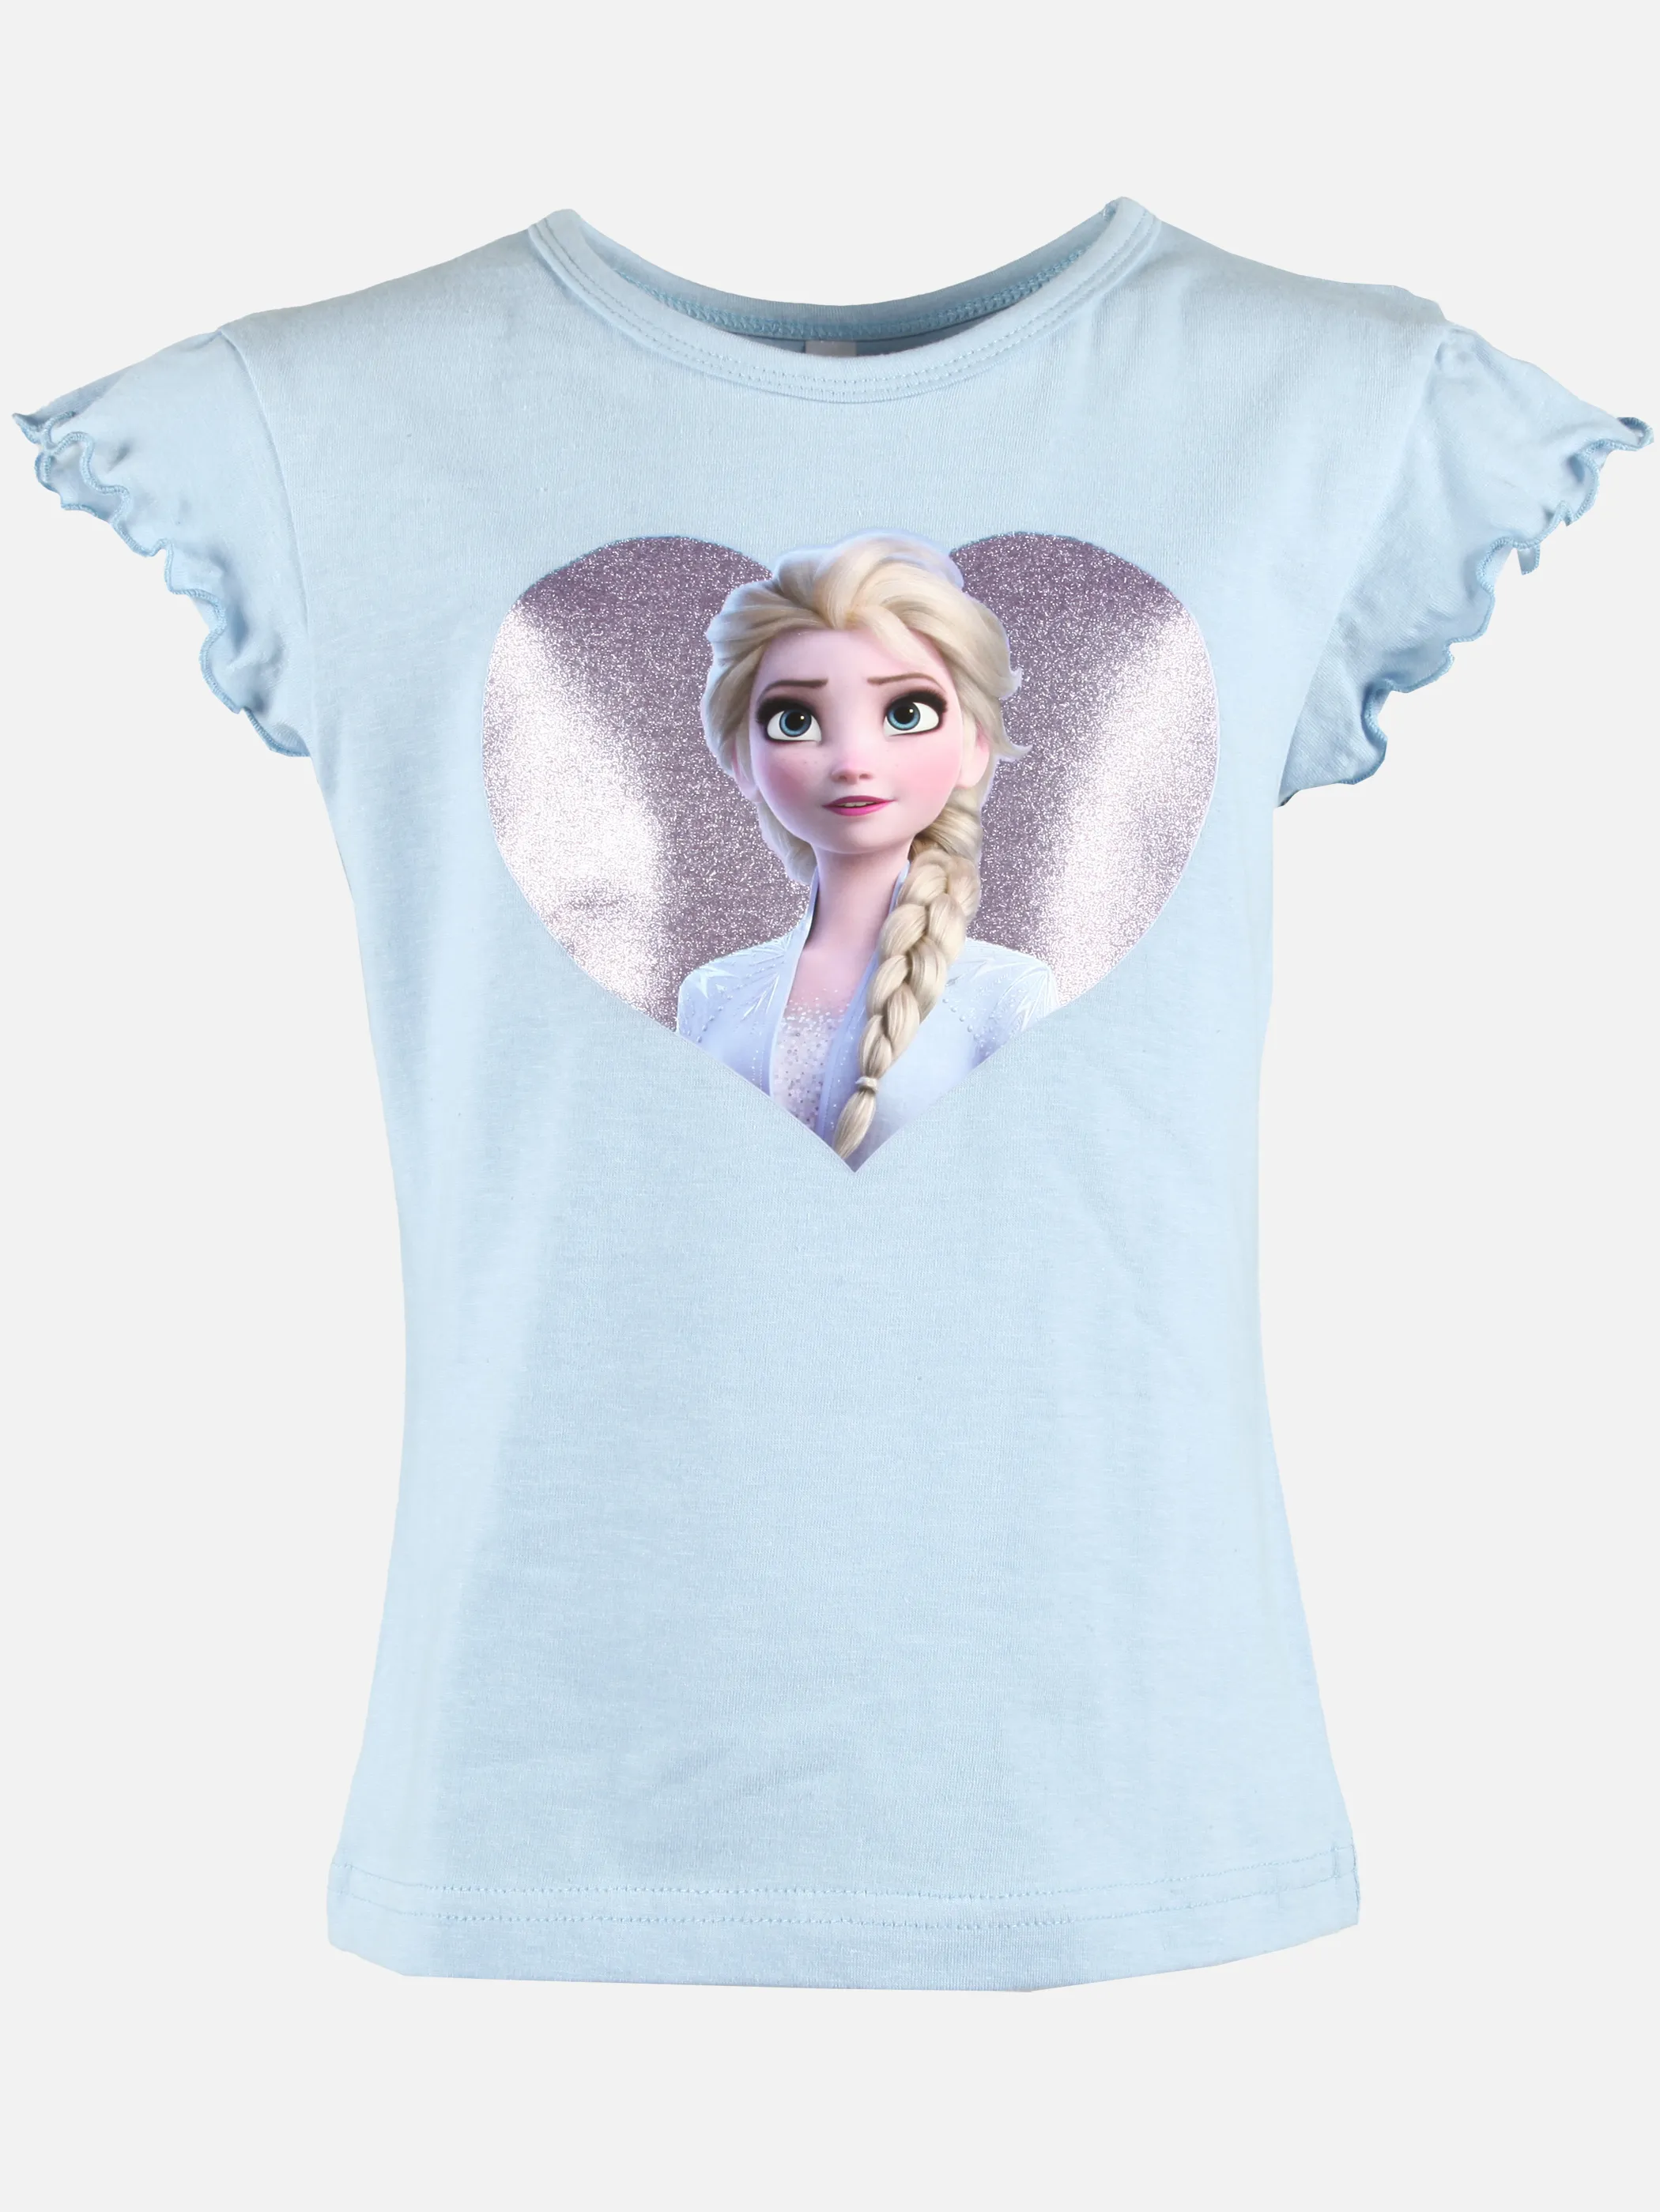 Frozen KM T-Shirt mit Frozen Frontdruck in hellblau Blau 892449 HELLBLAU 1